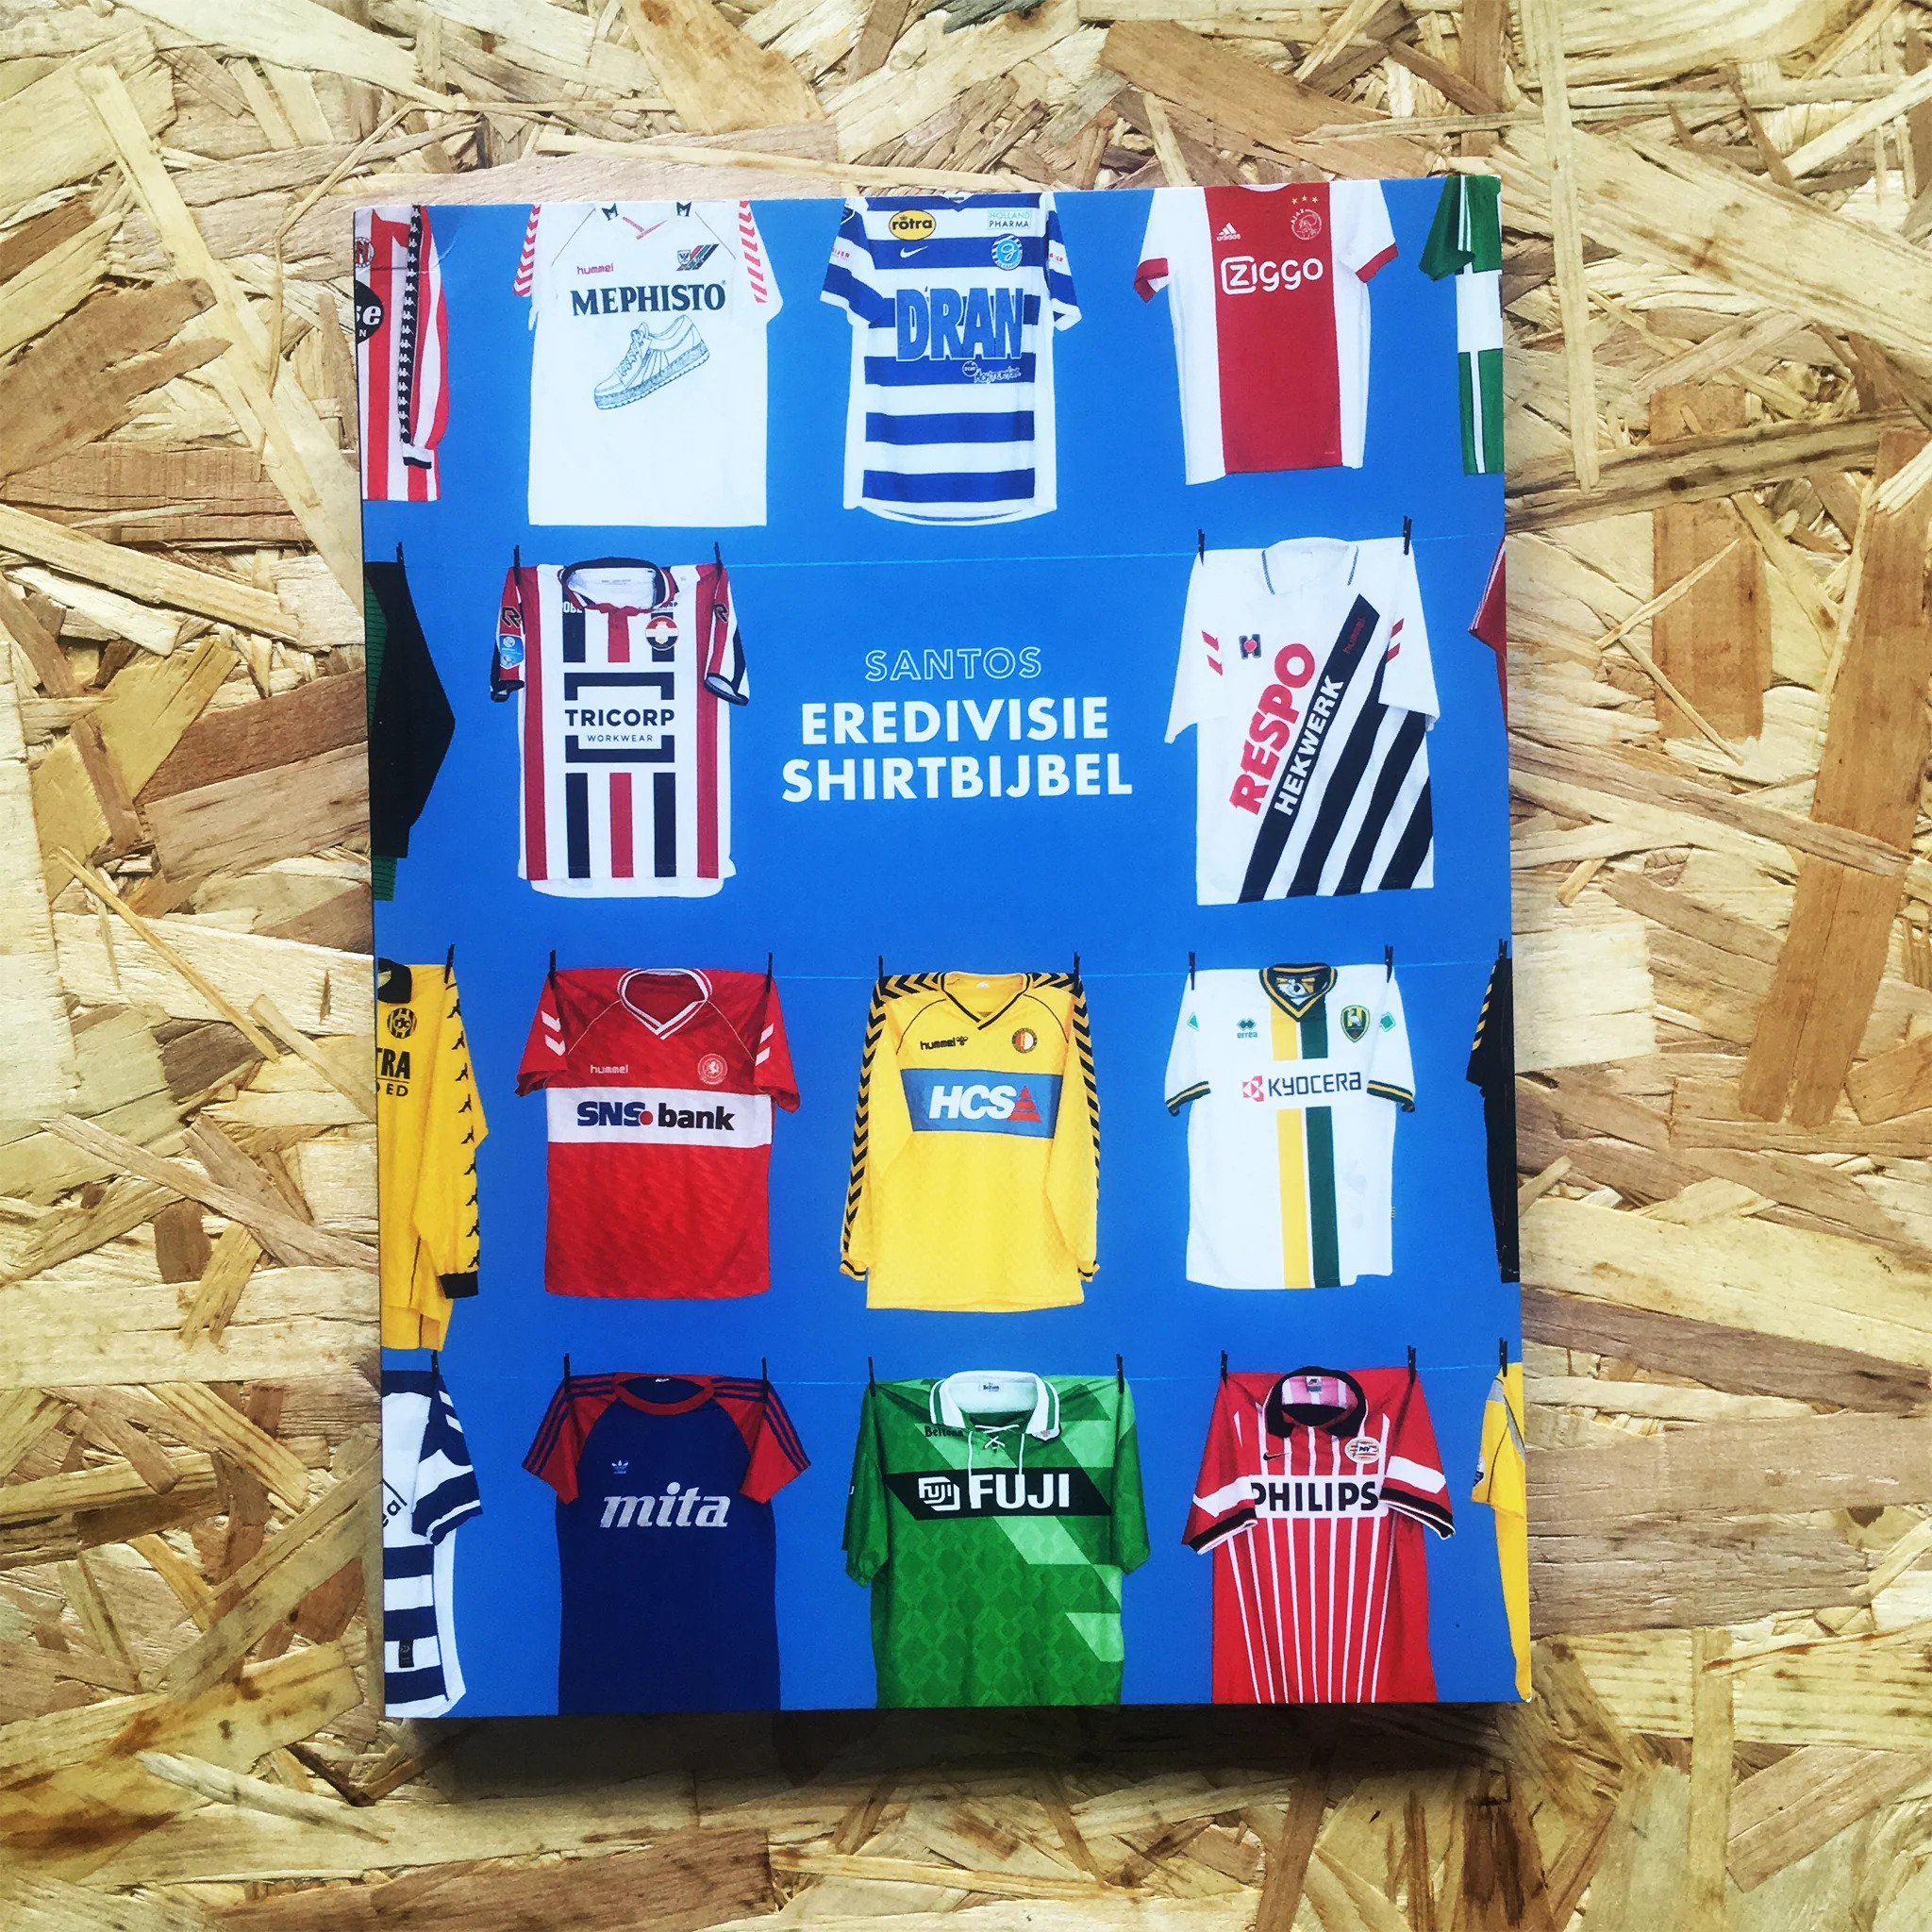 Santos Eredivisie Shirtbijbel